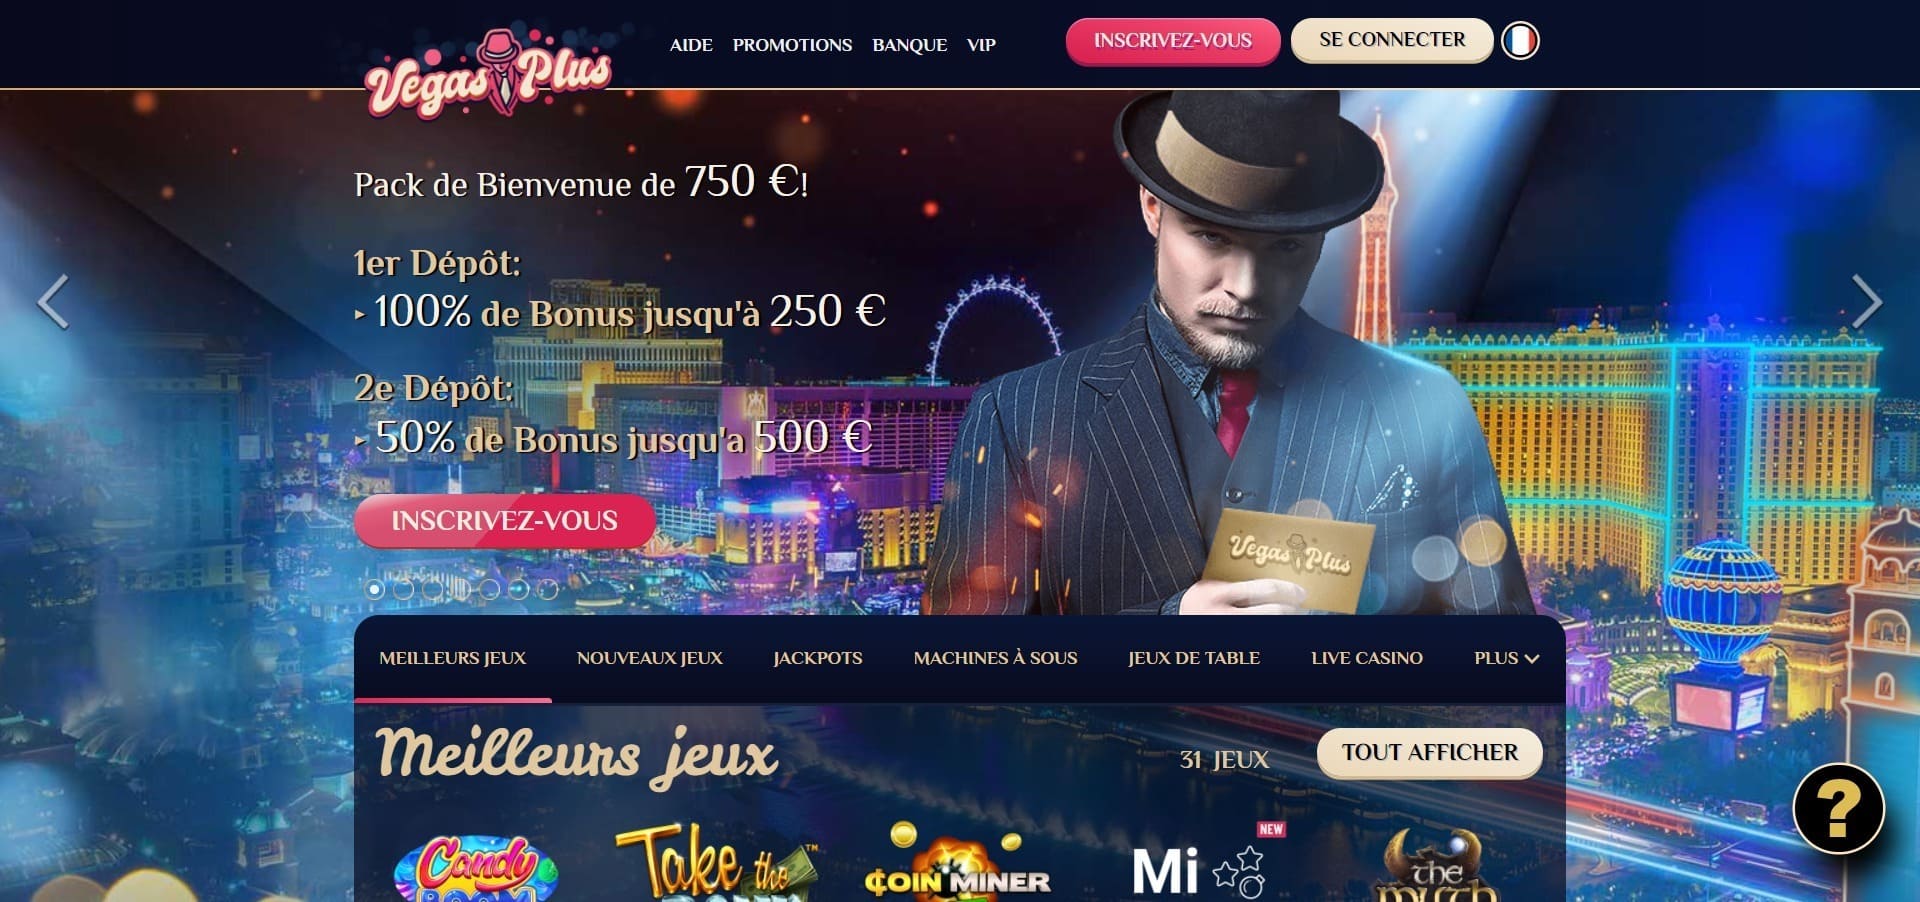 Site officiel de Vegasplus Casino